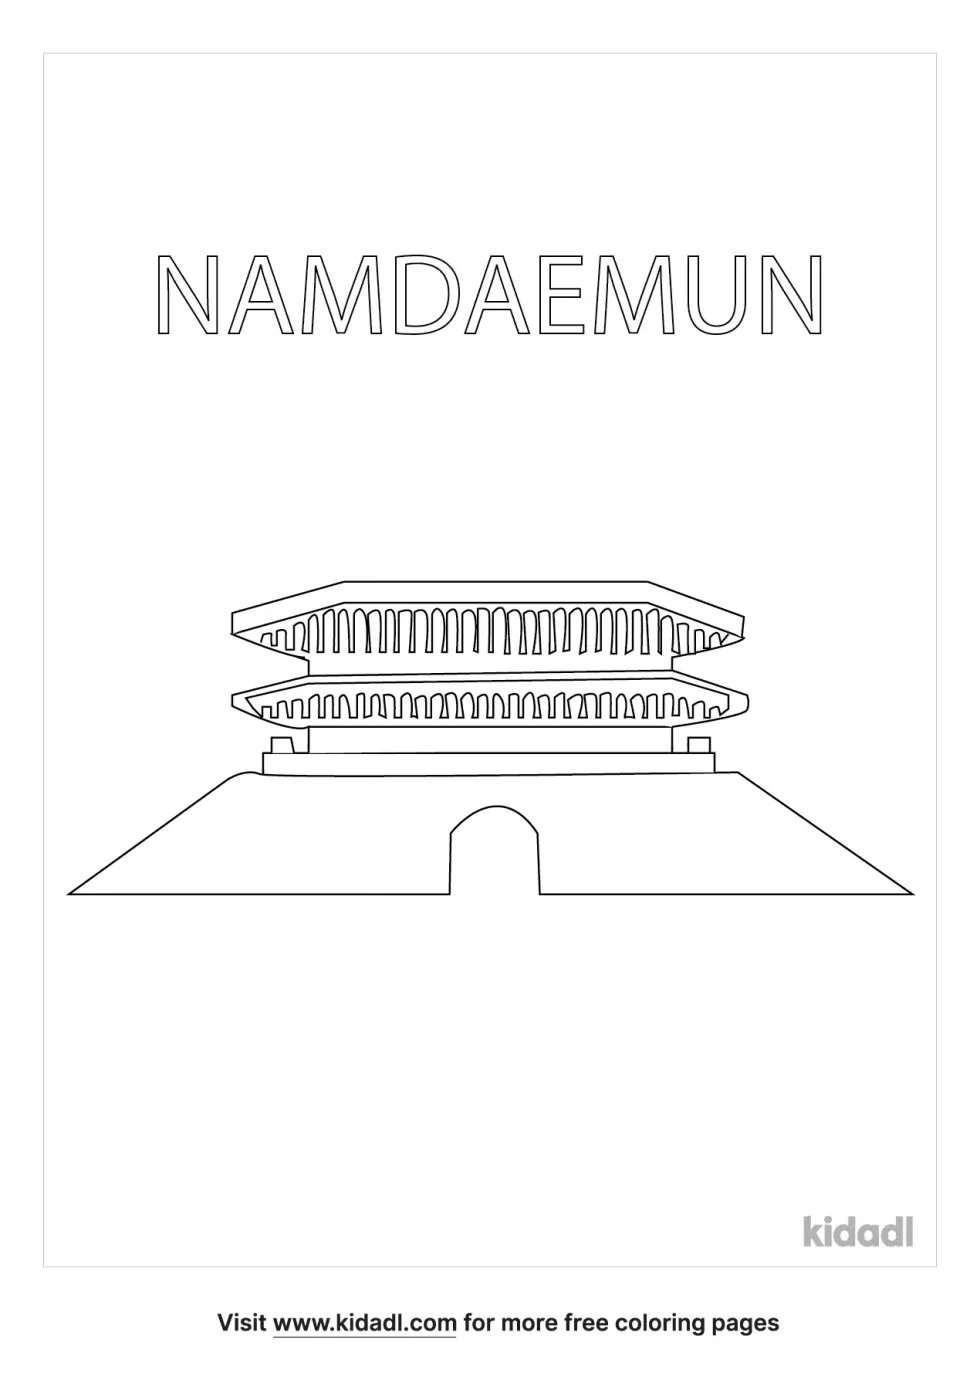 Namdaemun